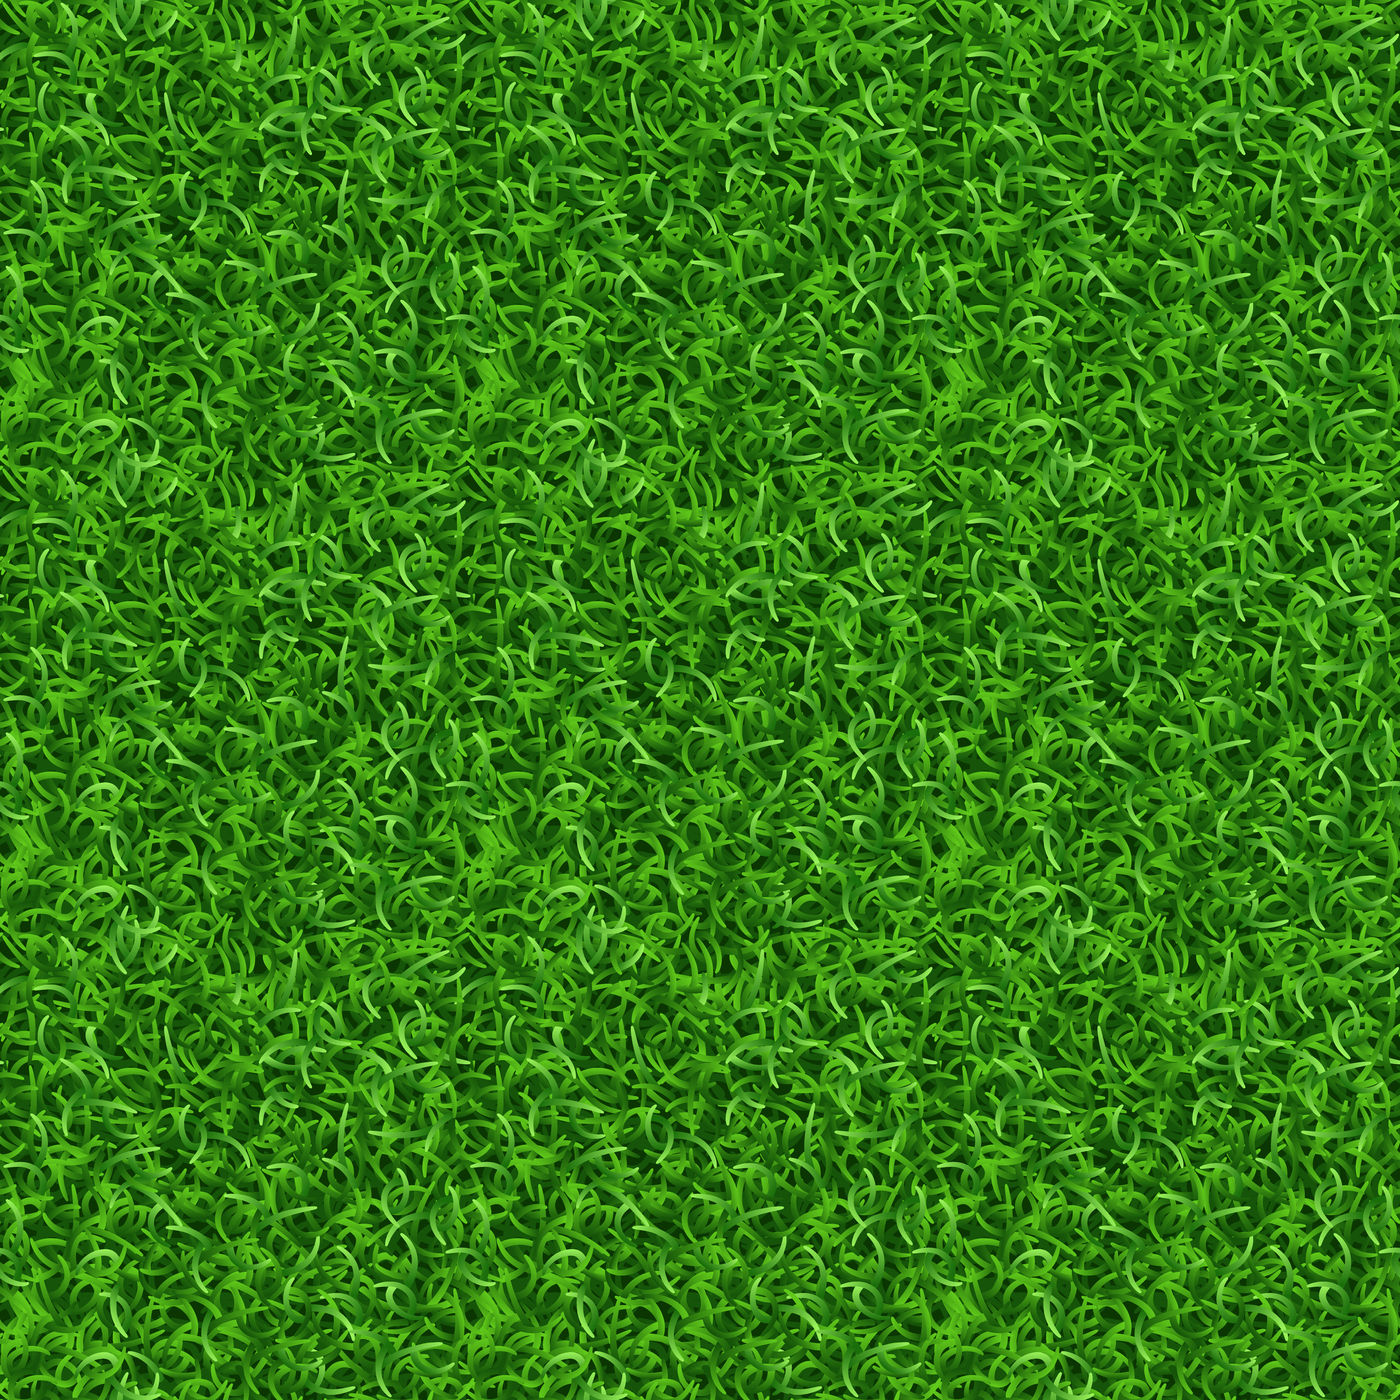 Grass Seamless Texture Grass Texture Seamless Grass Seamless Grass Images 